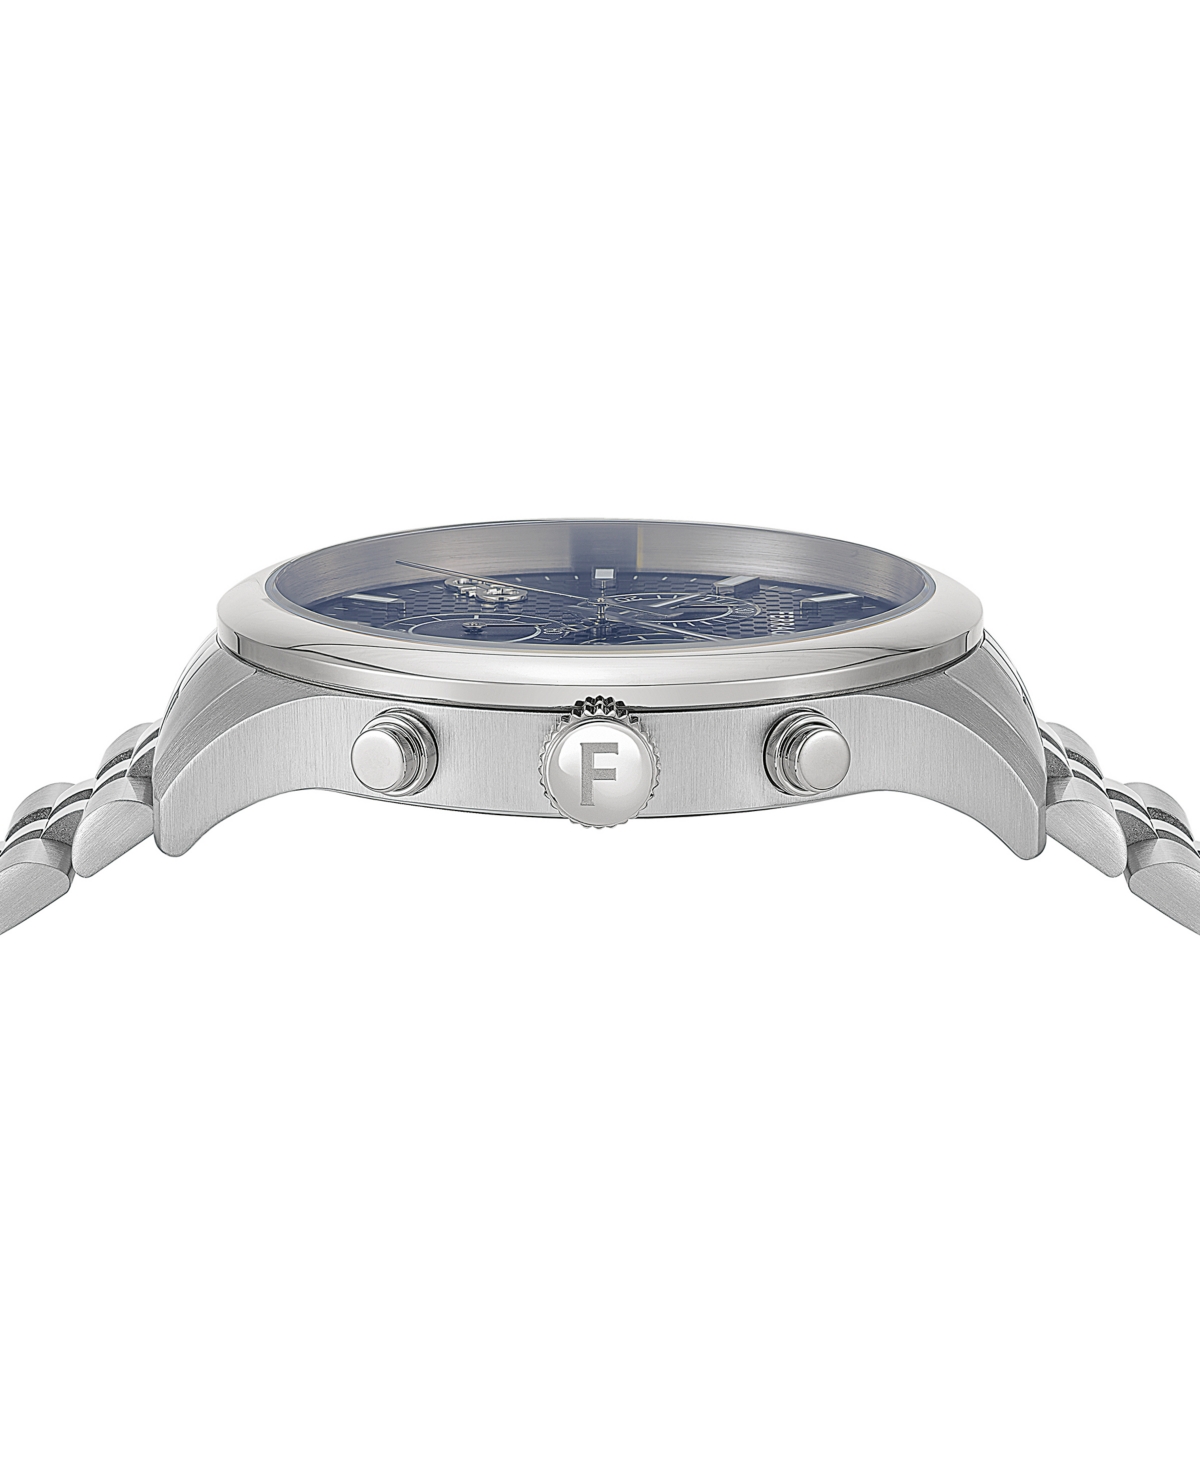 Shop Ferragamo Salvatore  Men's Swiss Chronograph Stainless Steel Bracelet Watch 42mm